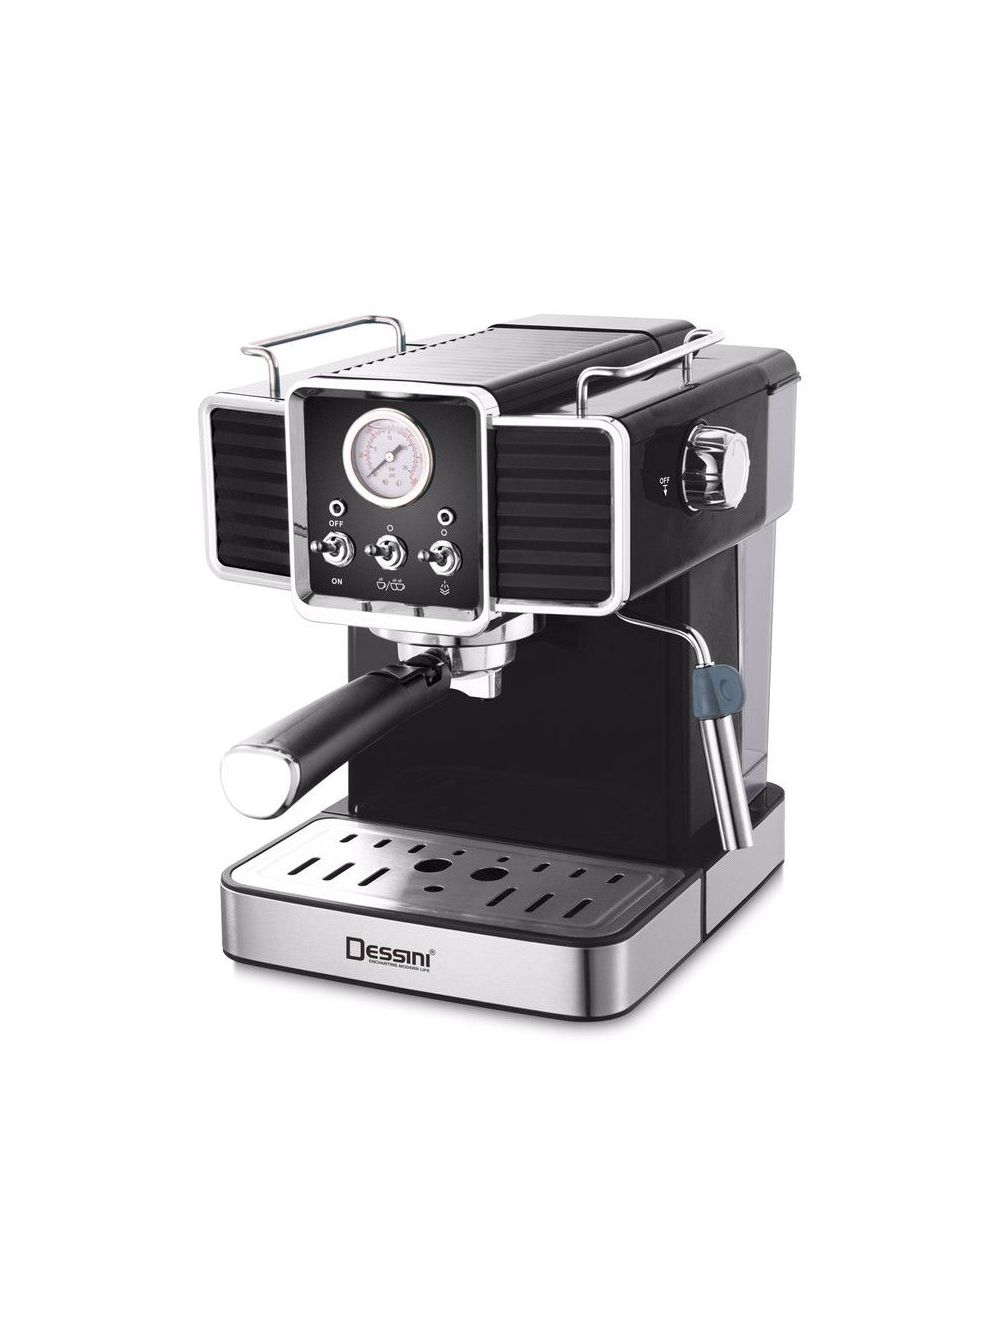 Dessini High Quality Automatic Espresso Machine 1350W 15 BARS-AKAT143